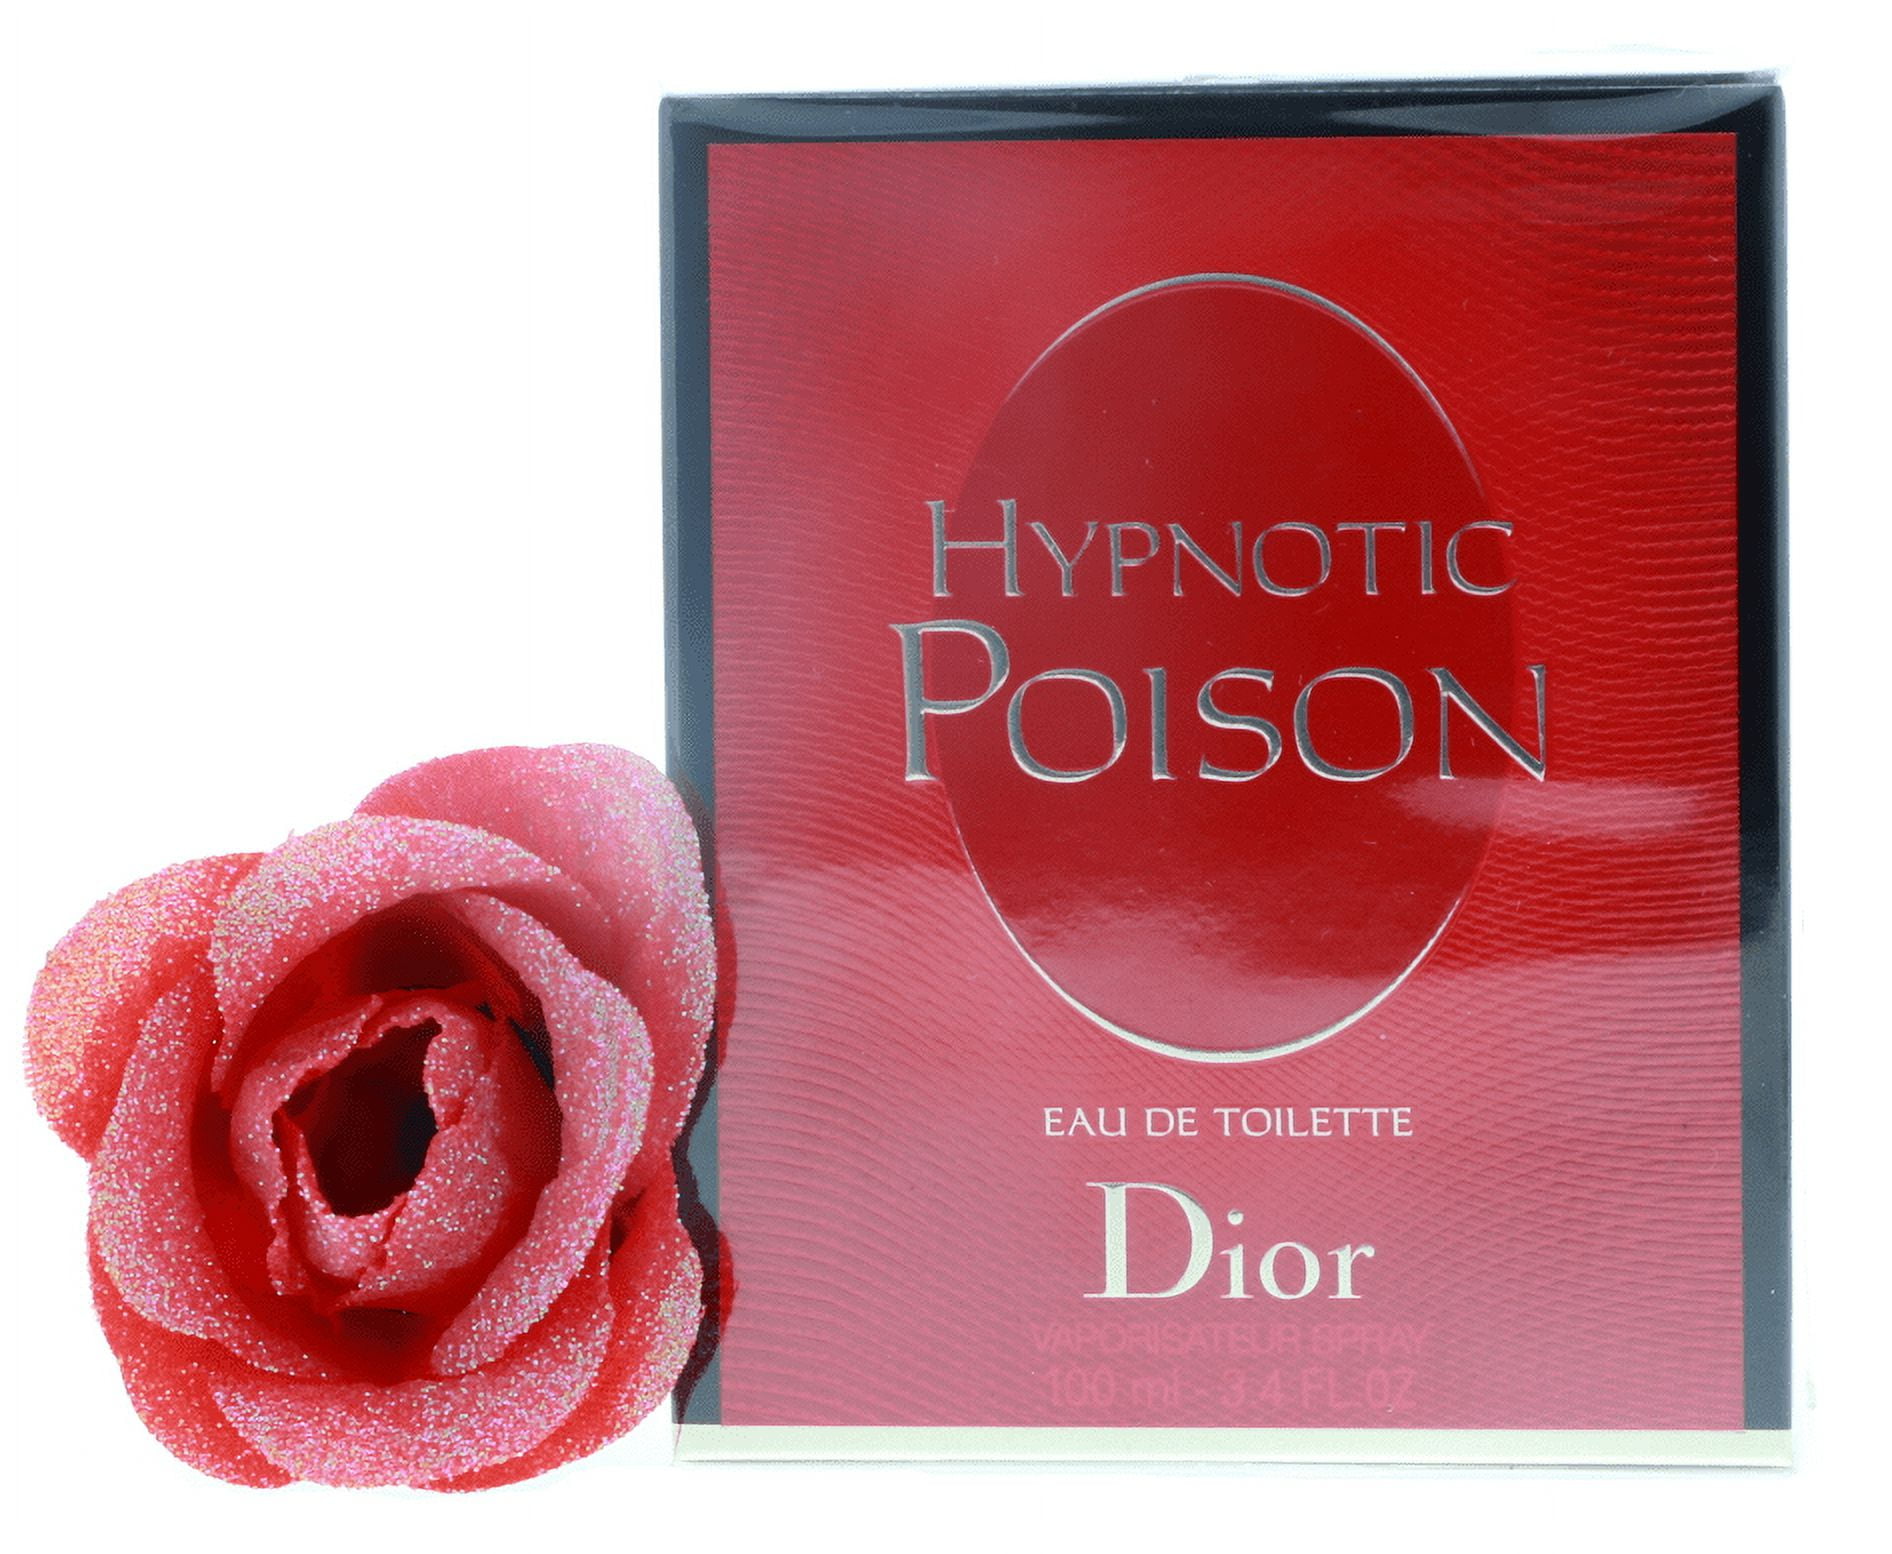 Hypnotic Poison by Christian Dior Eau de Toilette Spray 3.4 oz